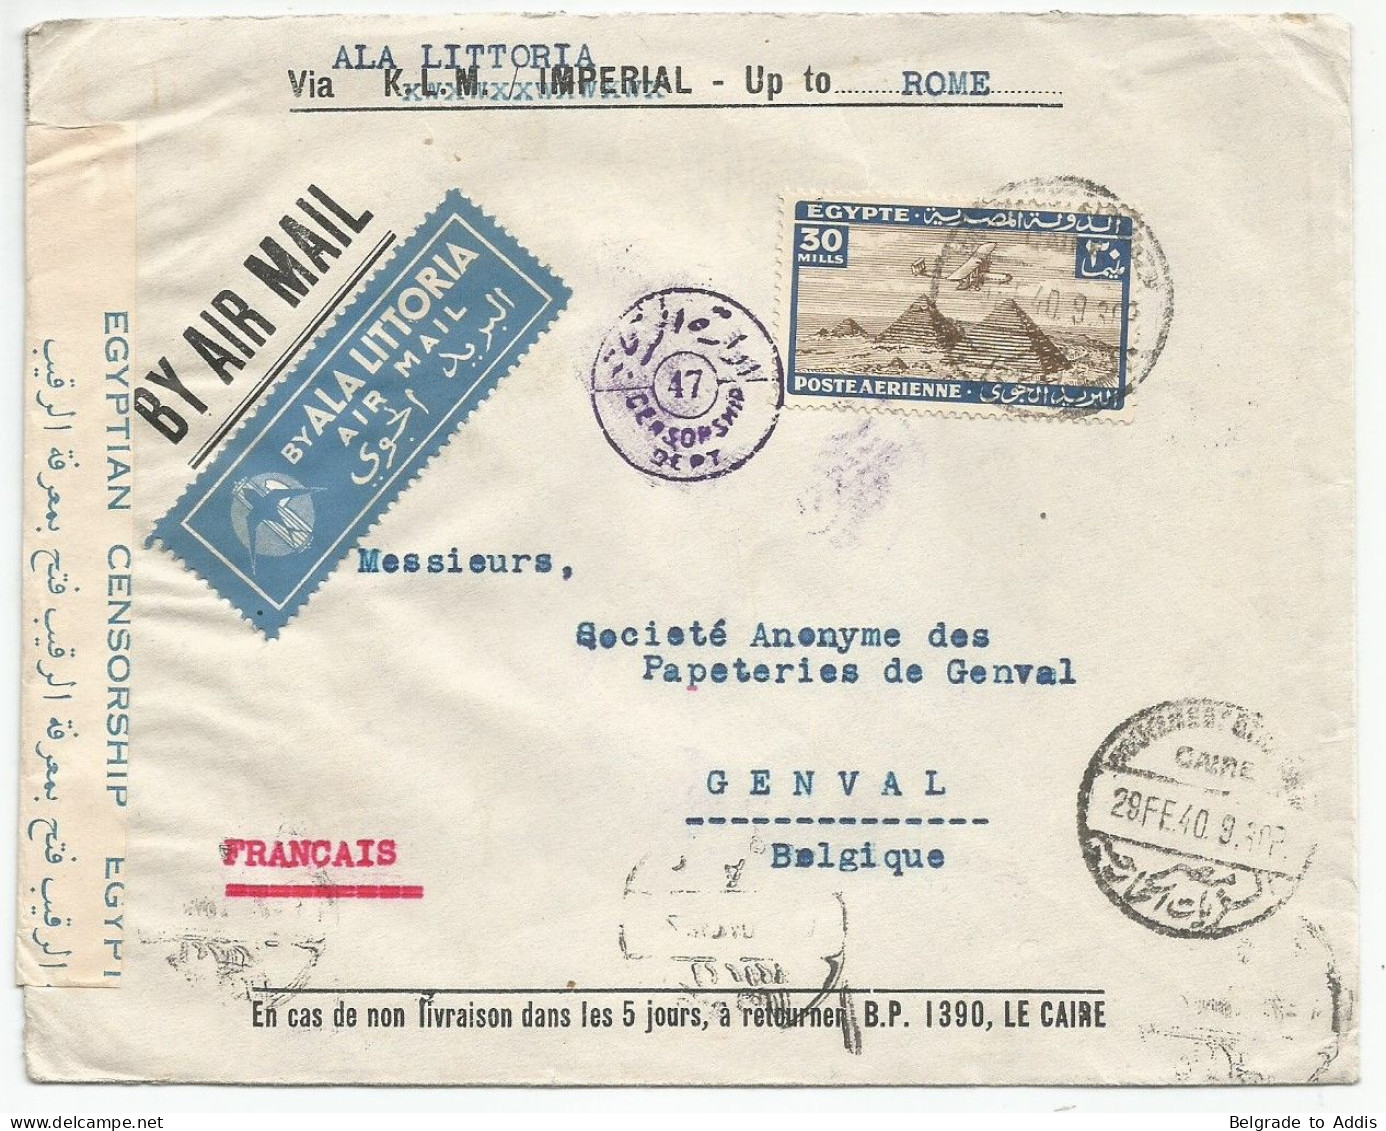 Egypt Air Mail Censored Cover Sent By ALA LITTORIA Via Roma Italy To Belgium 1940 - Posta Aerea